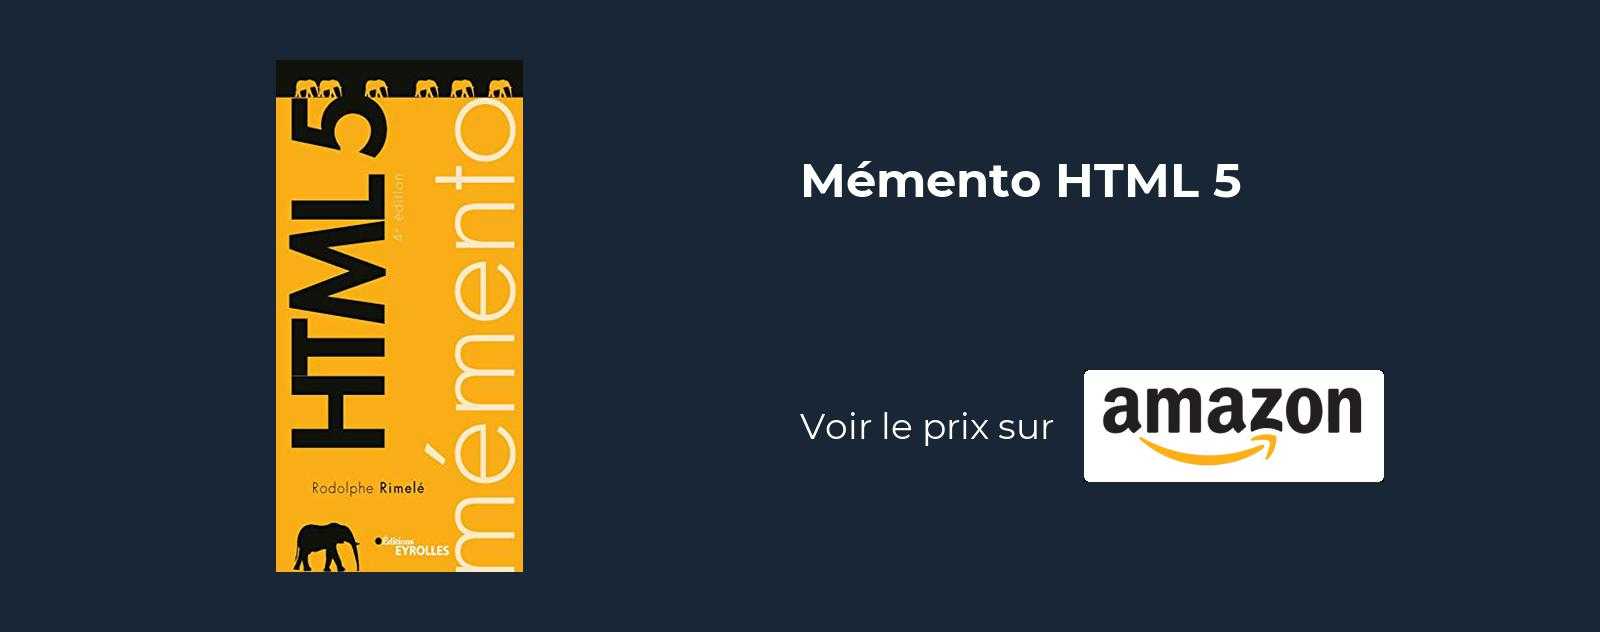 Memento HTML 5